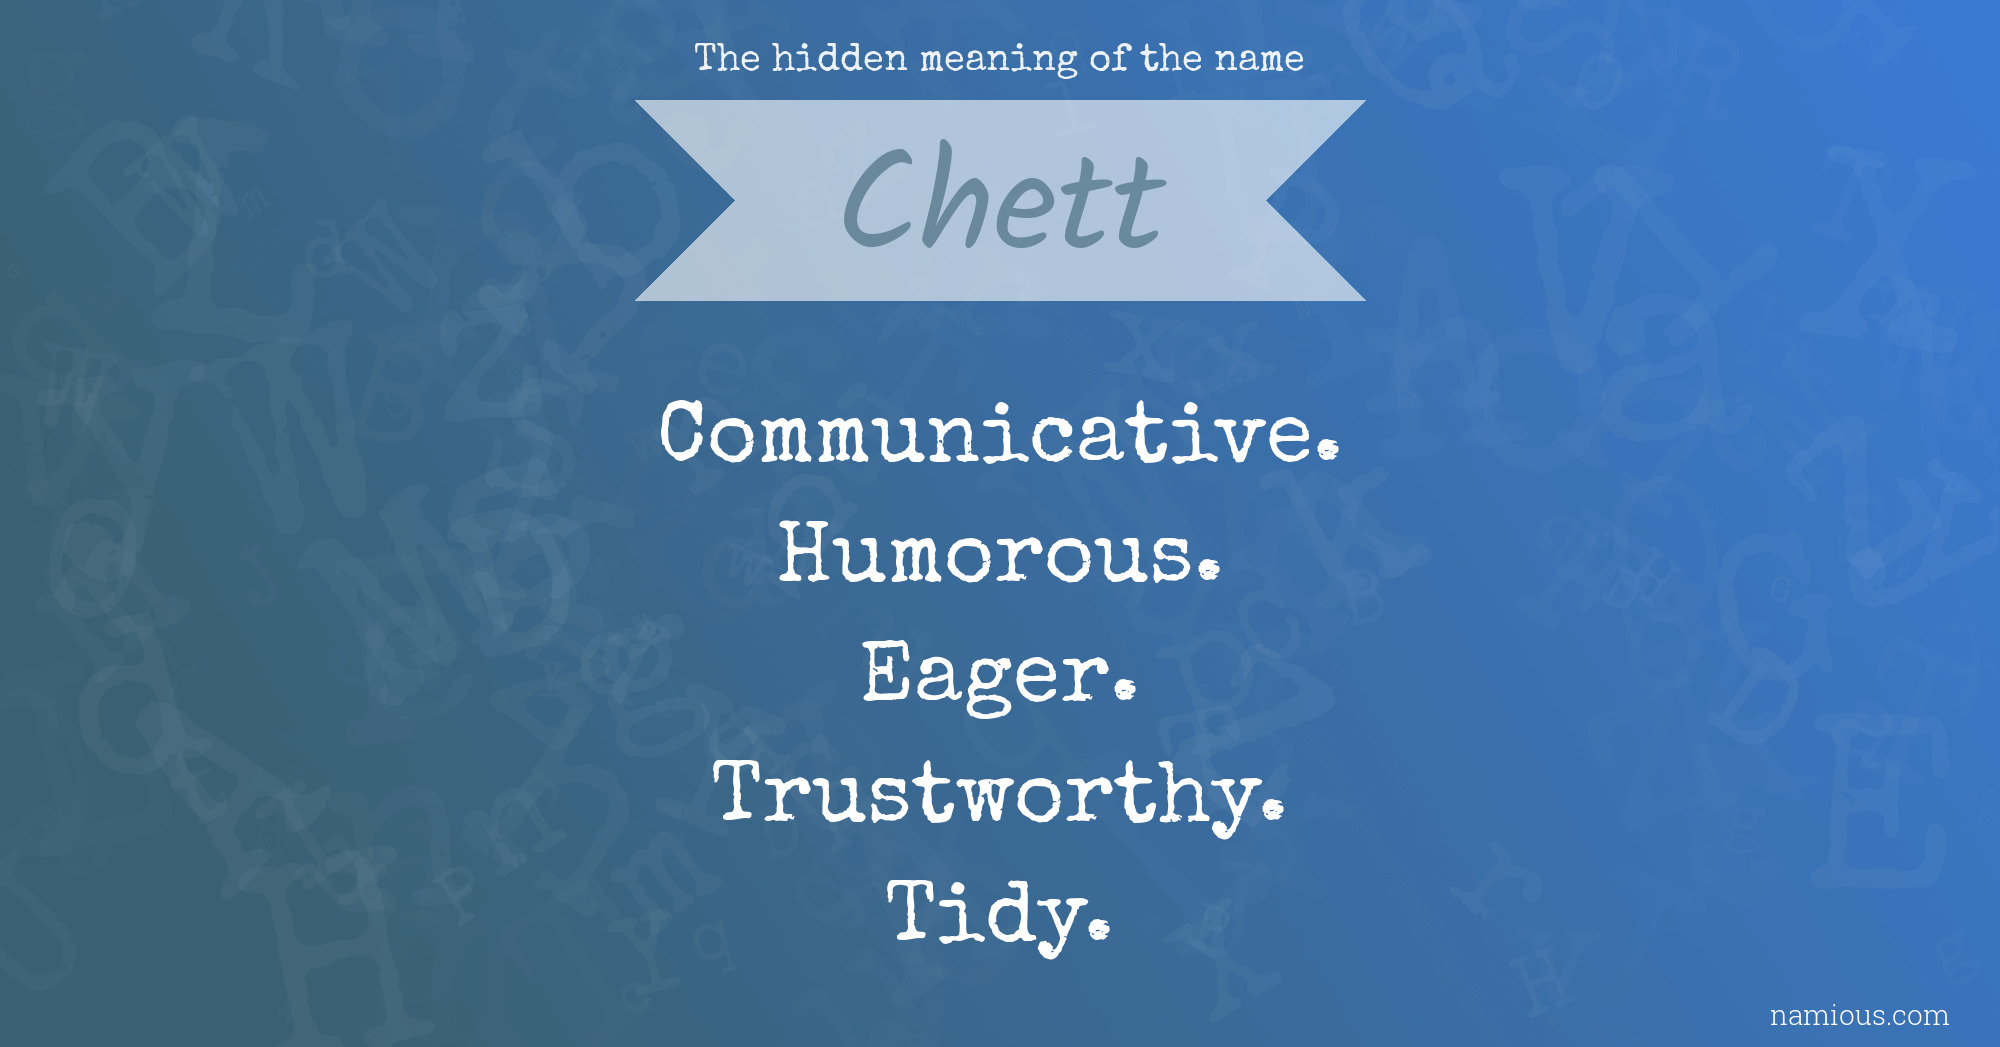 The hidden meaning of the name Chett